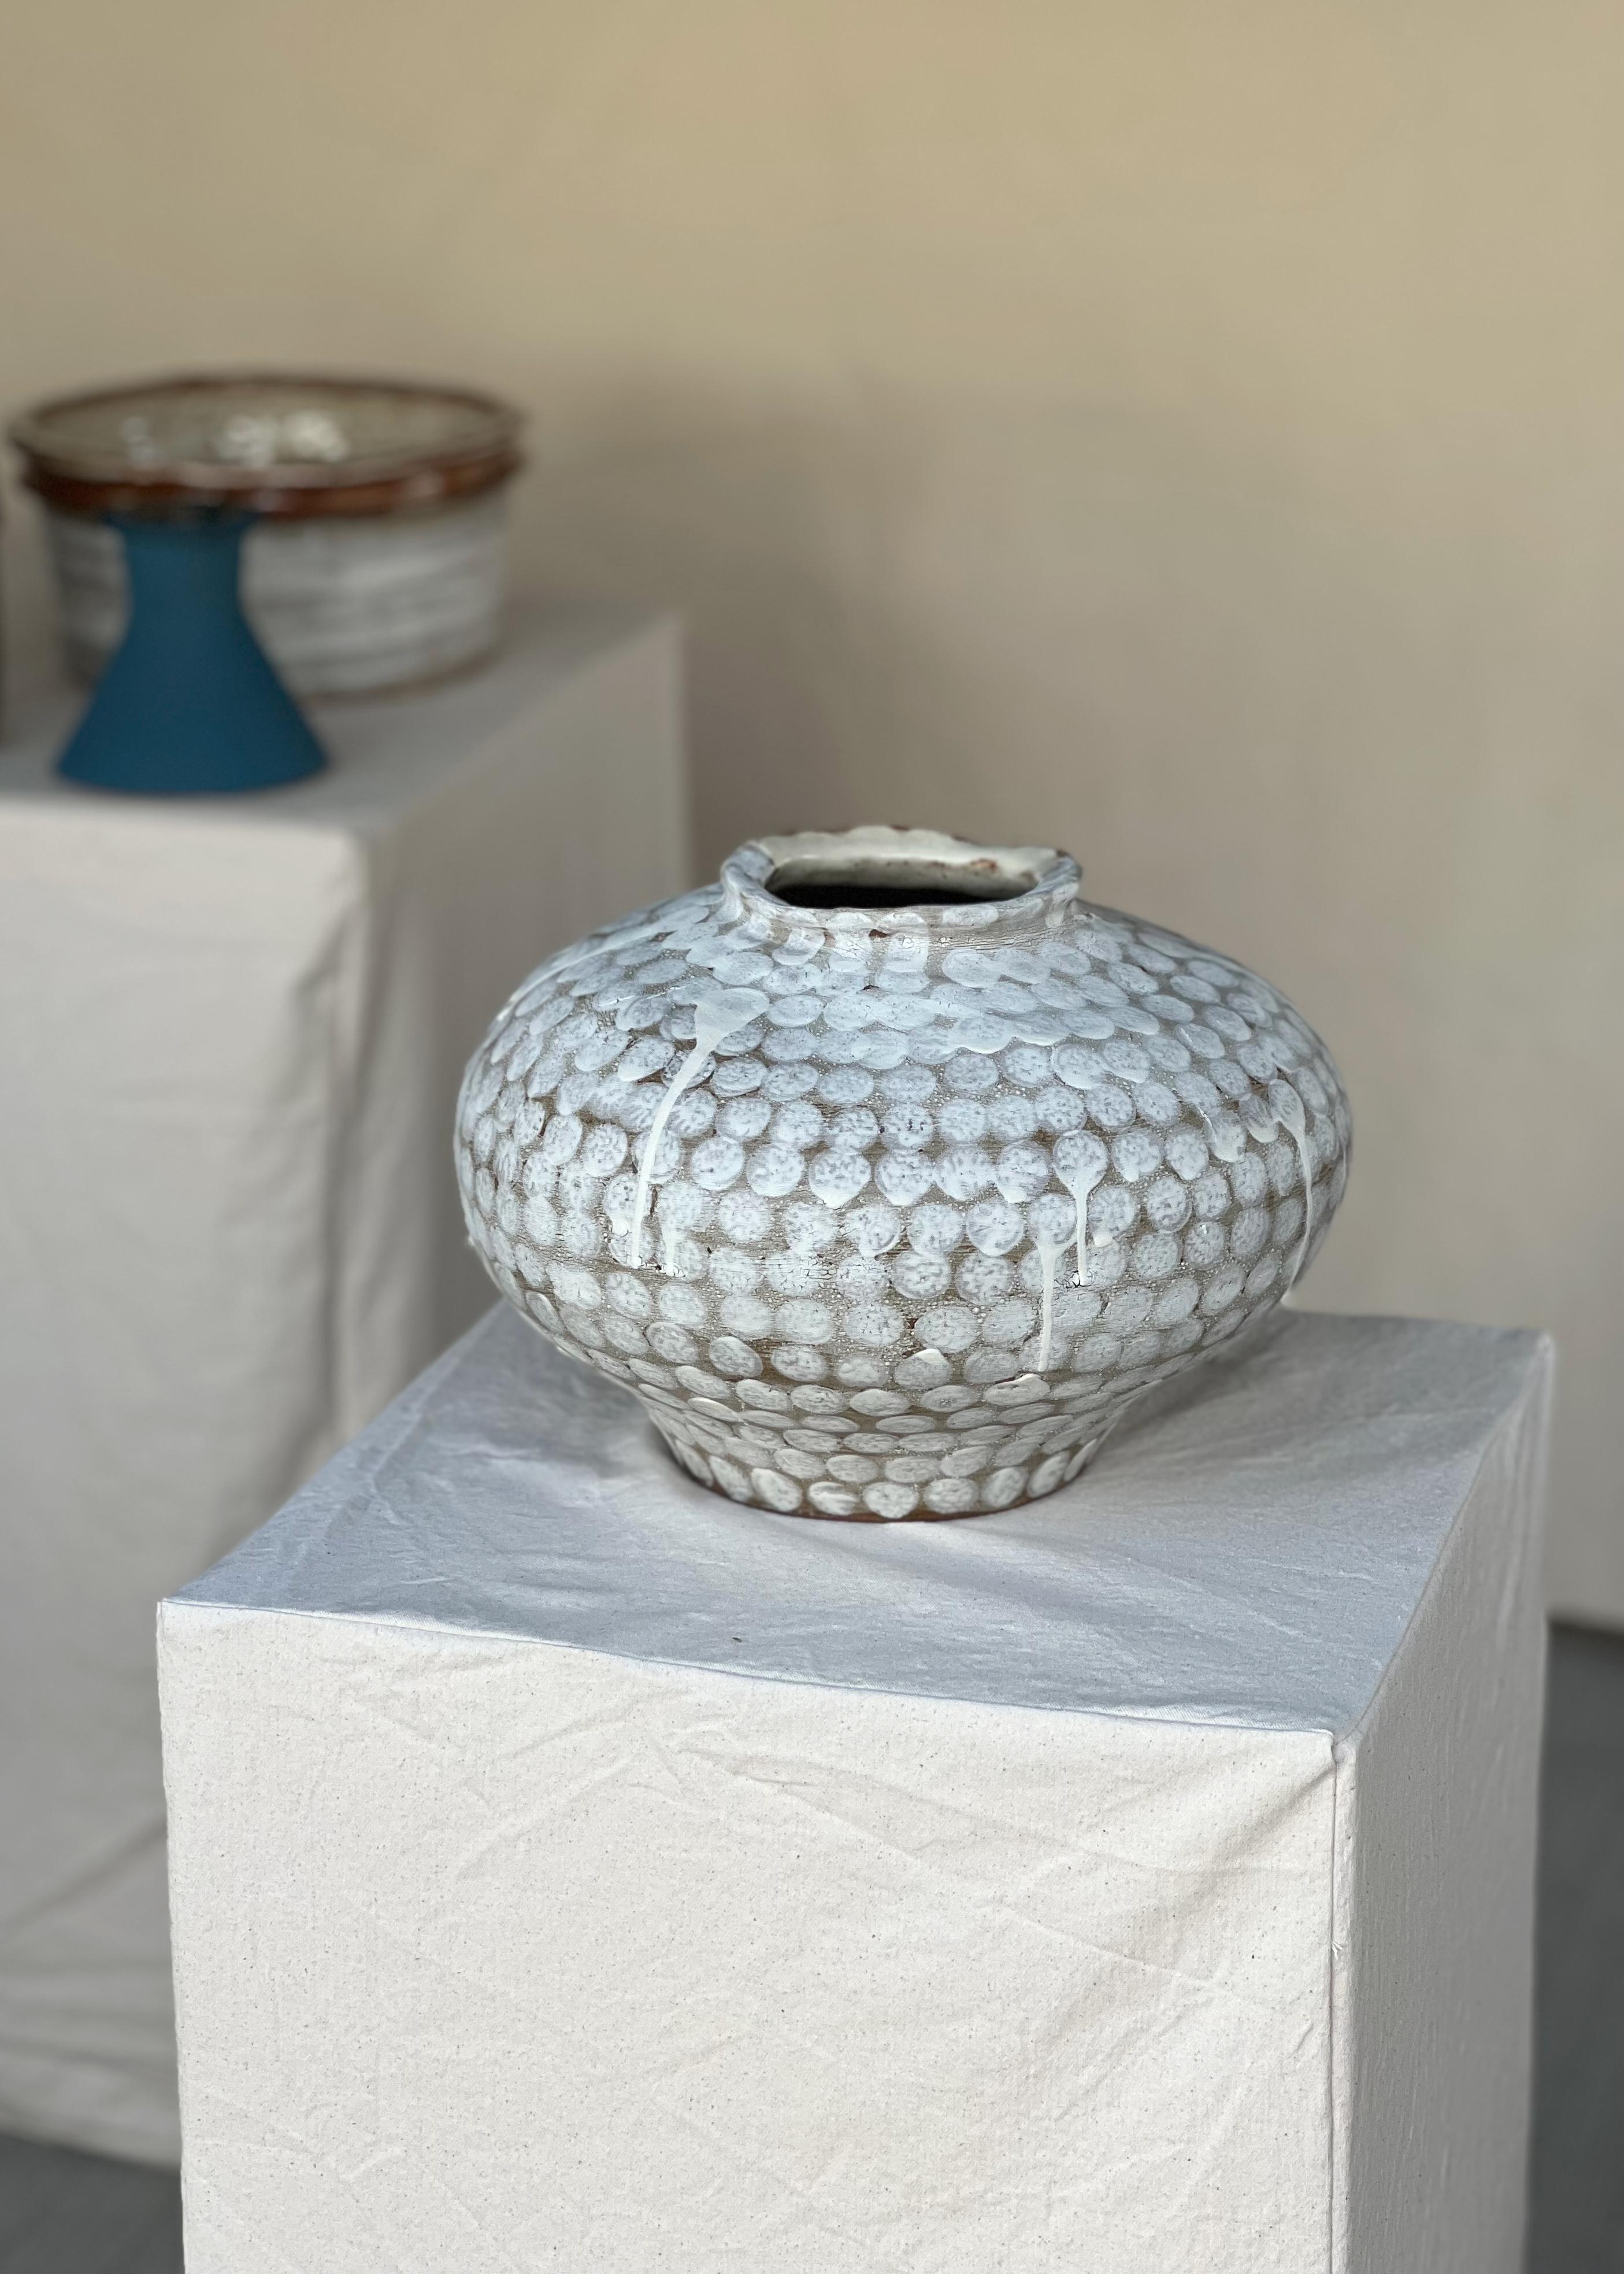 Unique, ceramic Emberken vessel, hand-crafted in Woodstock, NY in 2022.

Materials & finish:
Ceramic
Interior finish: glaze
Exterior finish: porcelain slip, glaze.